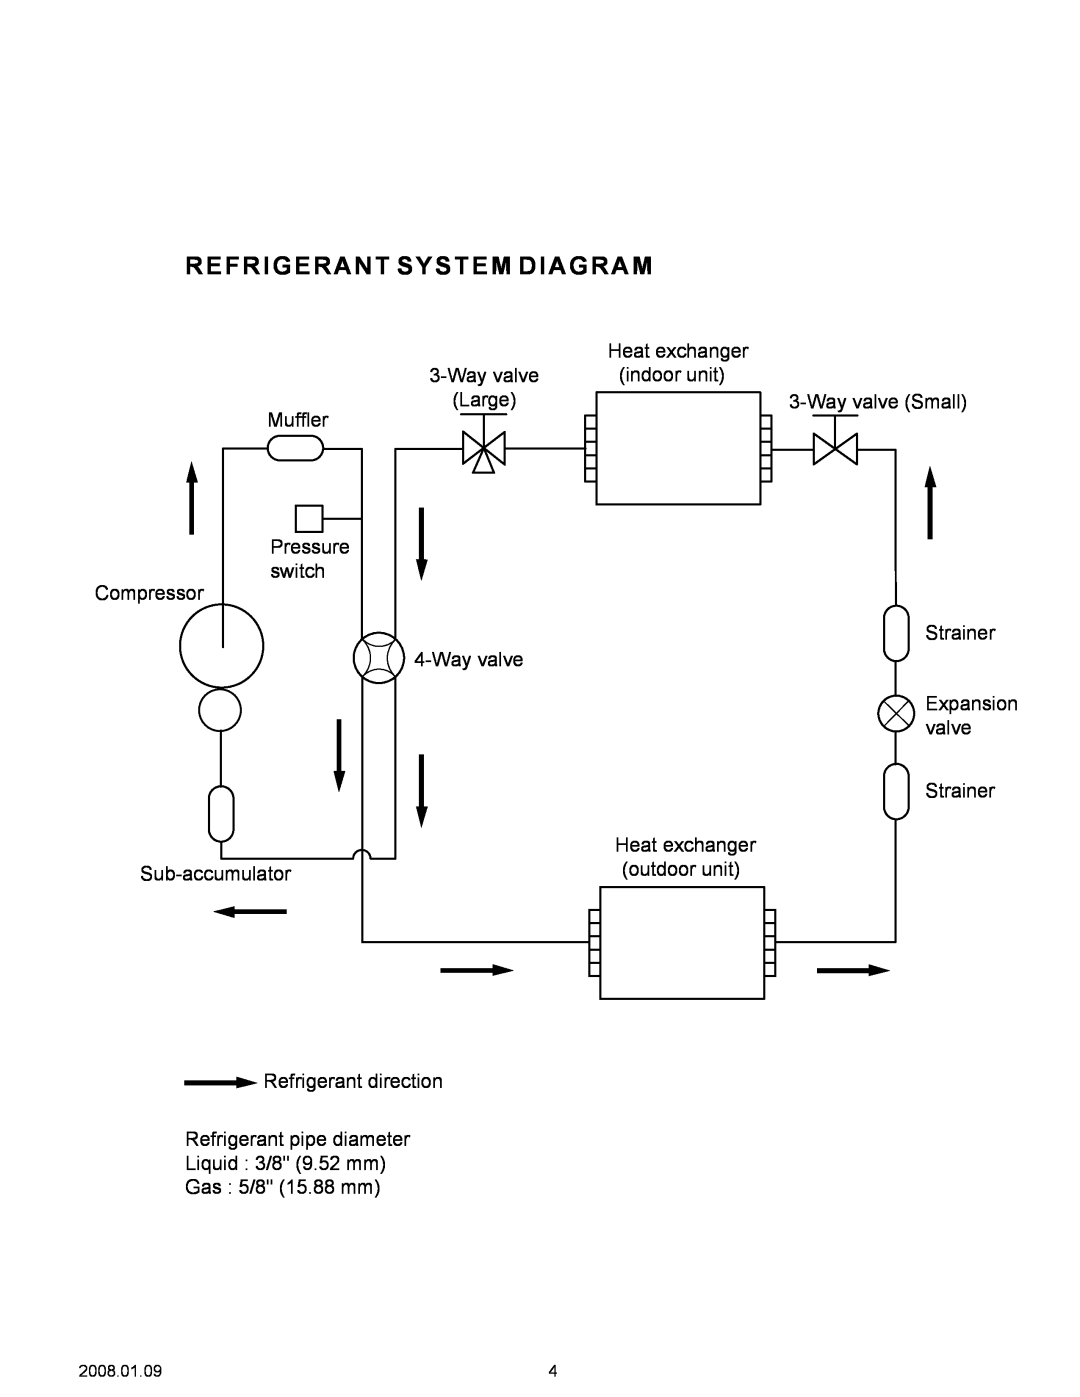 Friedrich M30CF Refrigerant System Diagram, Heat exchanger 3-Wayvalve indoor unit Large, Sub-accumulator, outdoor unit 